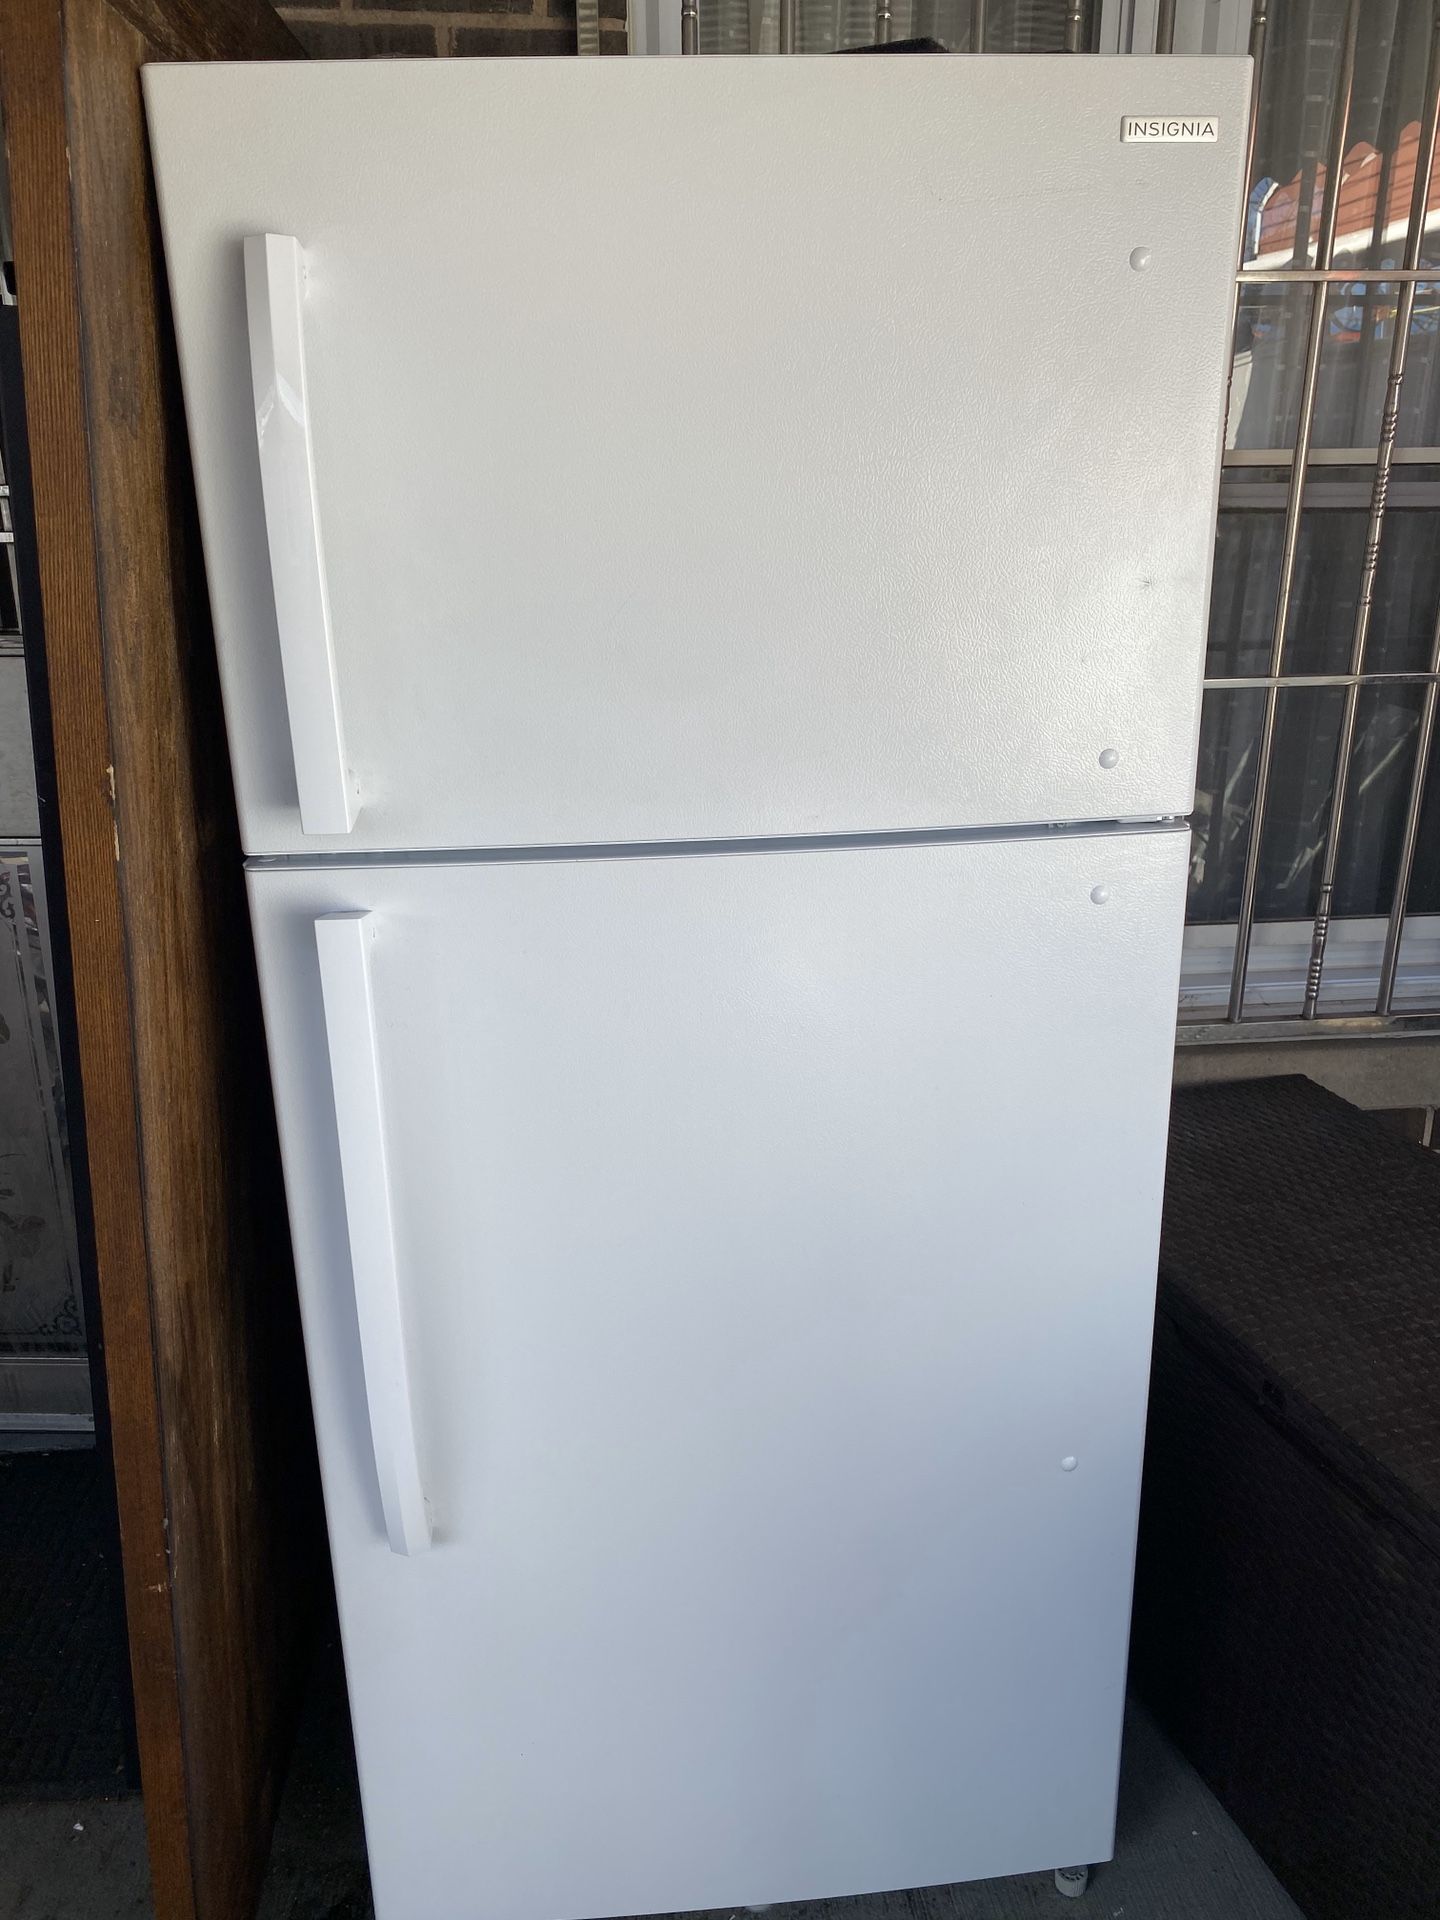 Insignia refrigerator (like new)